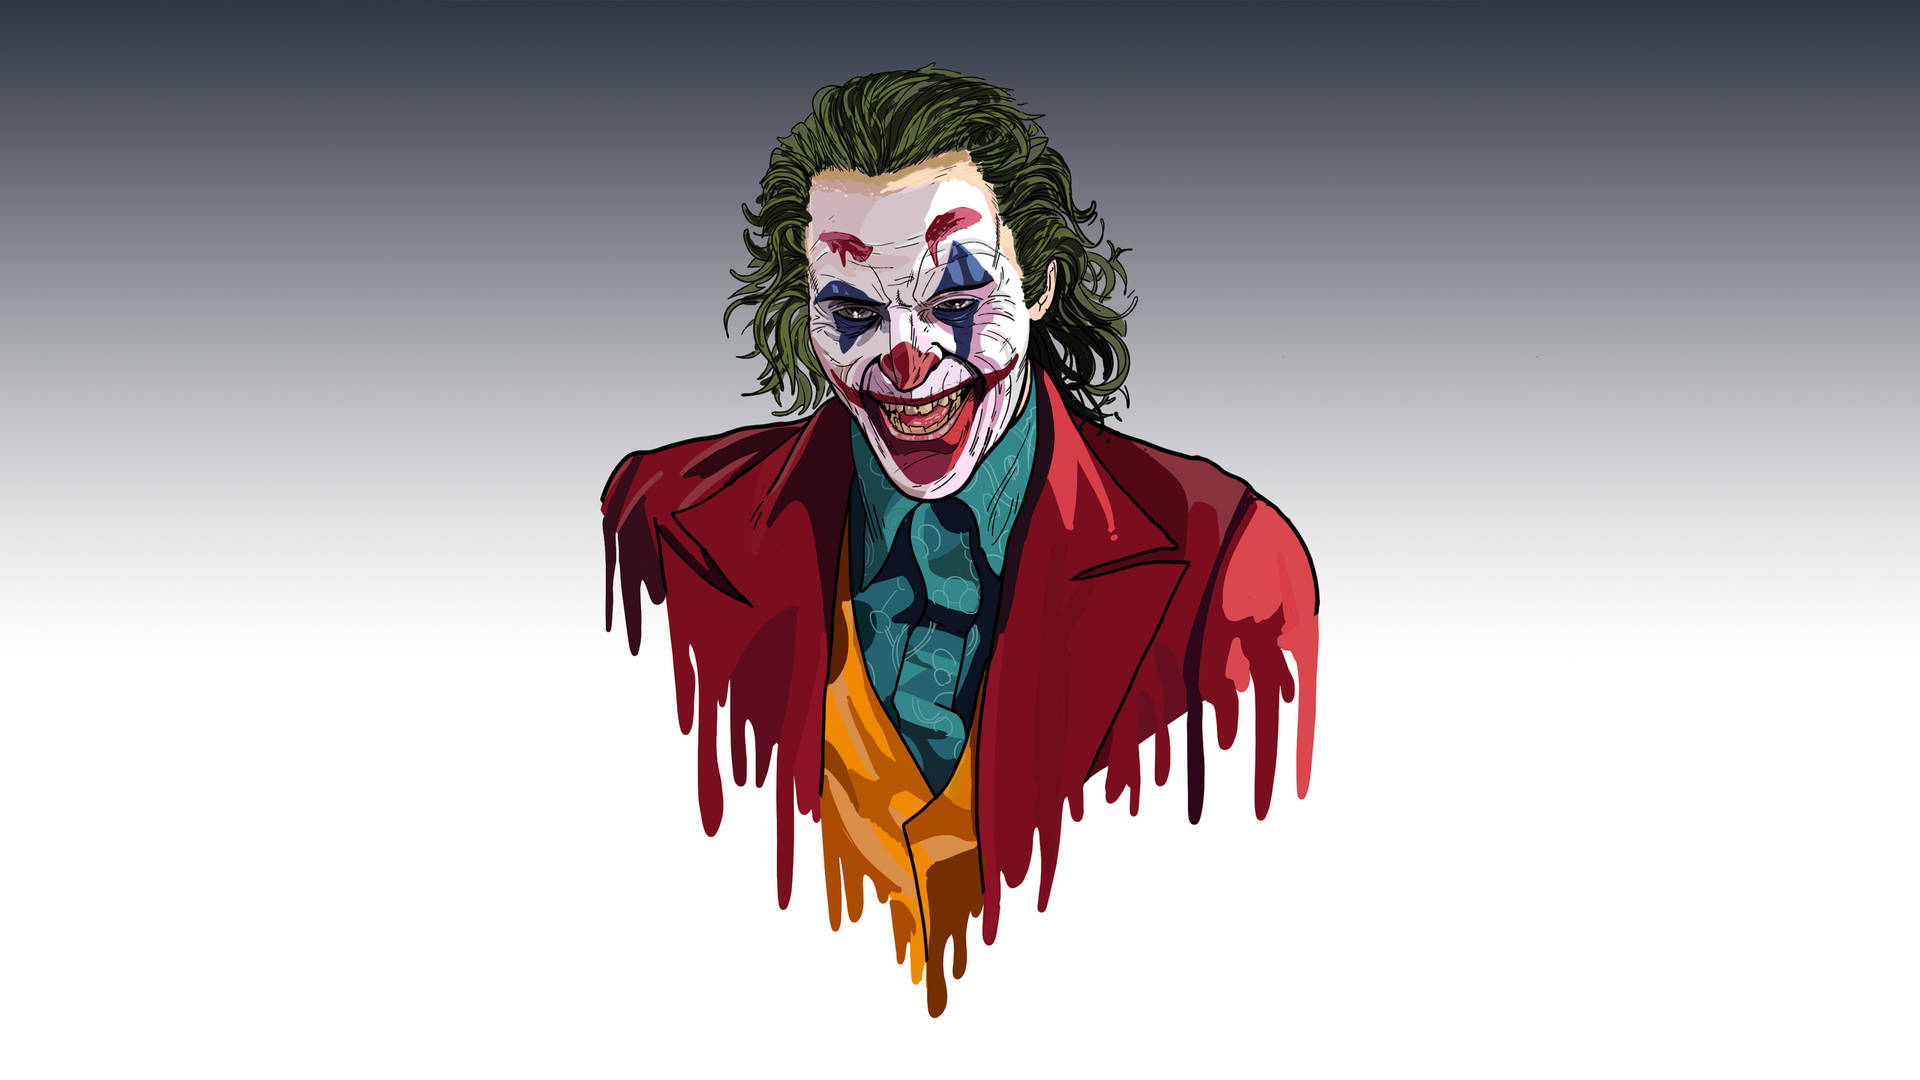 Joker 2019 Bust Sketch Background